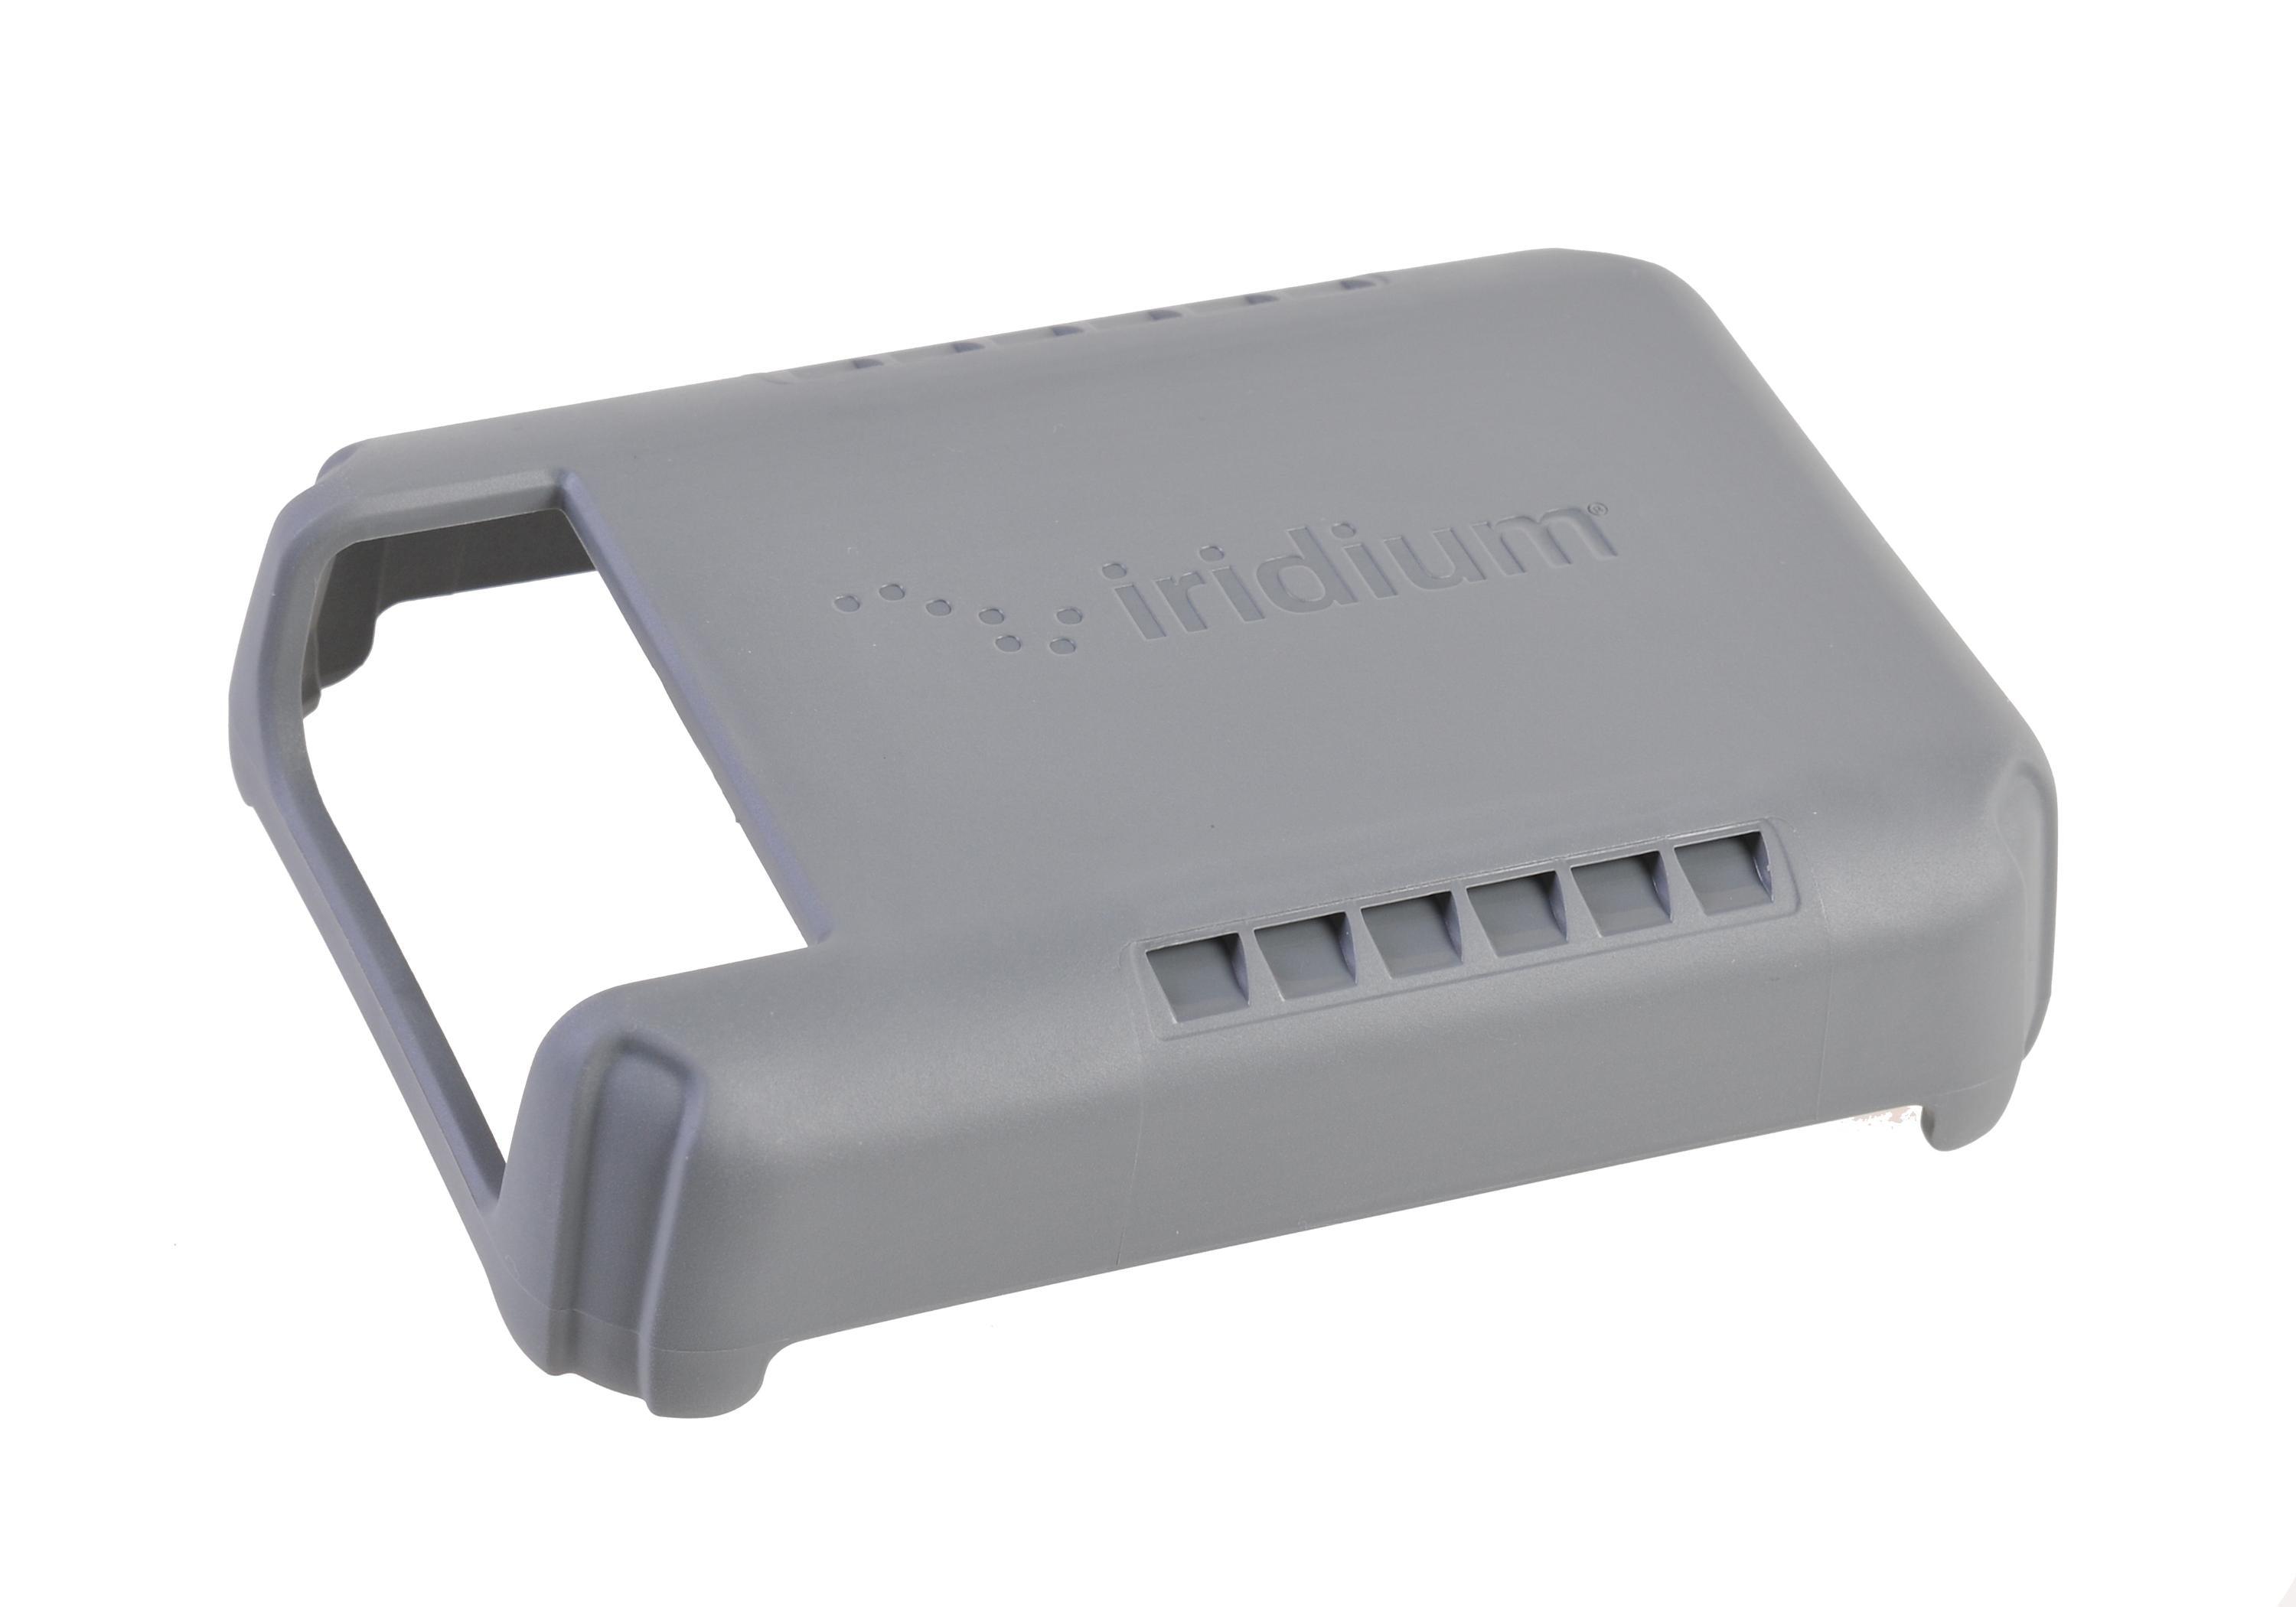 Protective Cover for the Iridium GO! Satellite Wi-Fi Hotspot